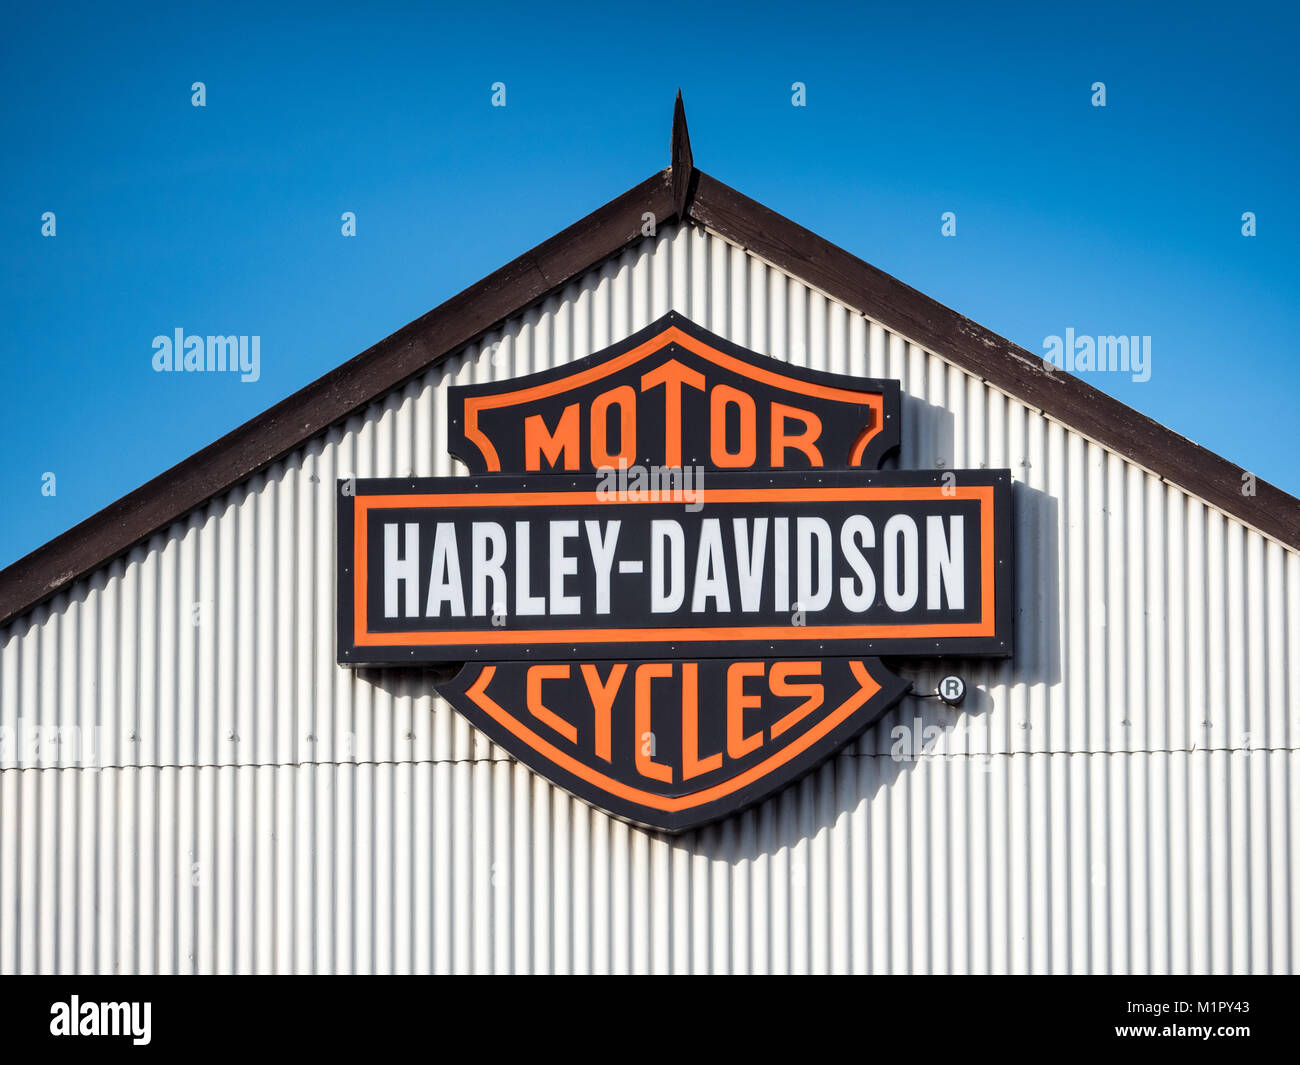 Harley Davidson Sign Sign On A Harley Davidson Dealership In The Uk Stock Photo Alamy